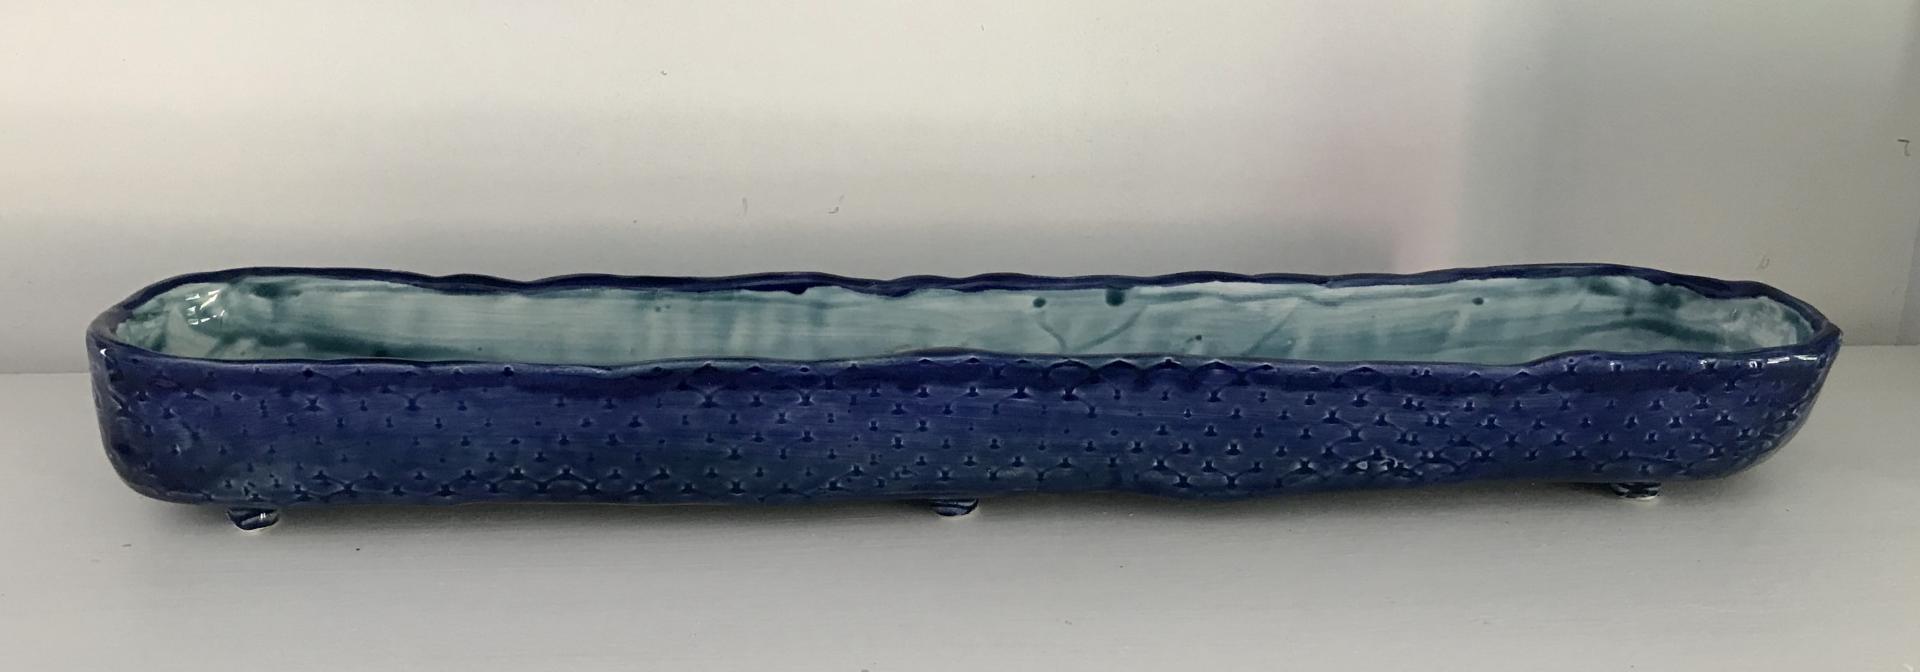 Cobalt and Aqua Fish Scale Trough 3-1/2 x 20-1/2 inch